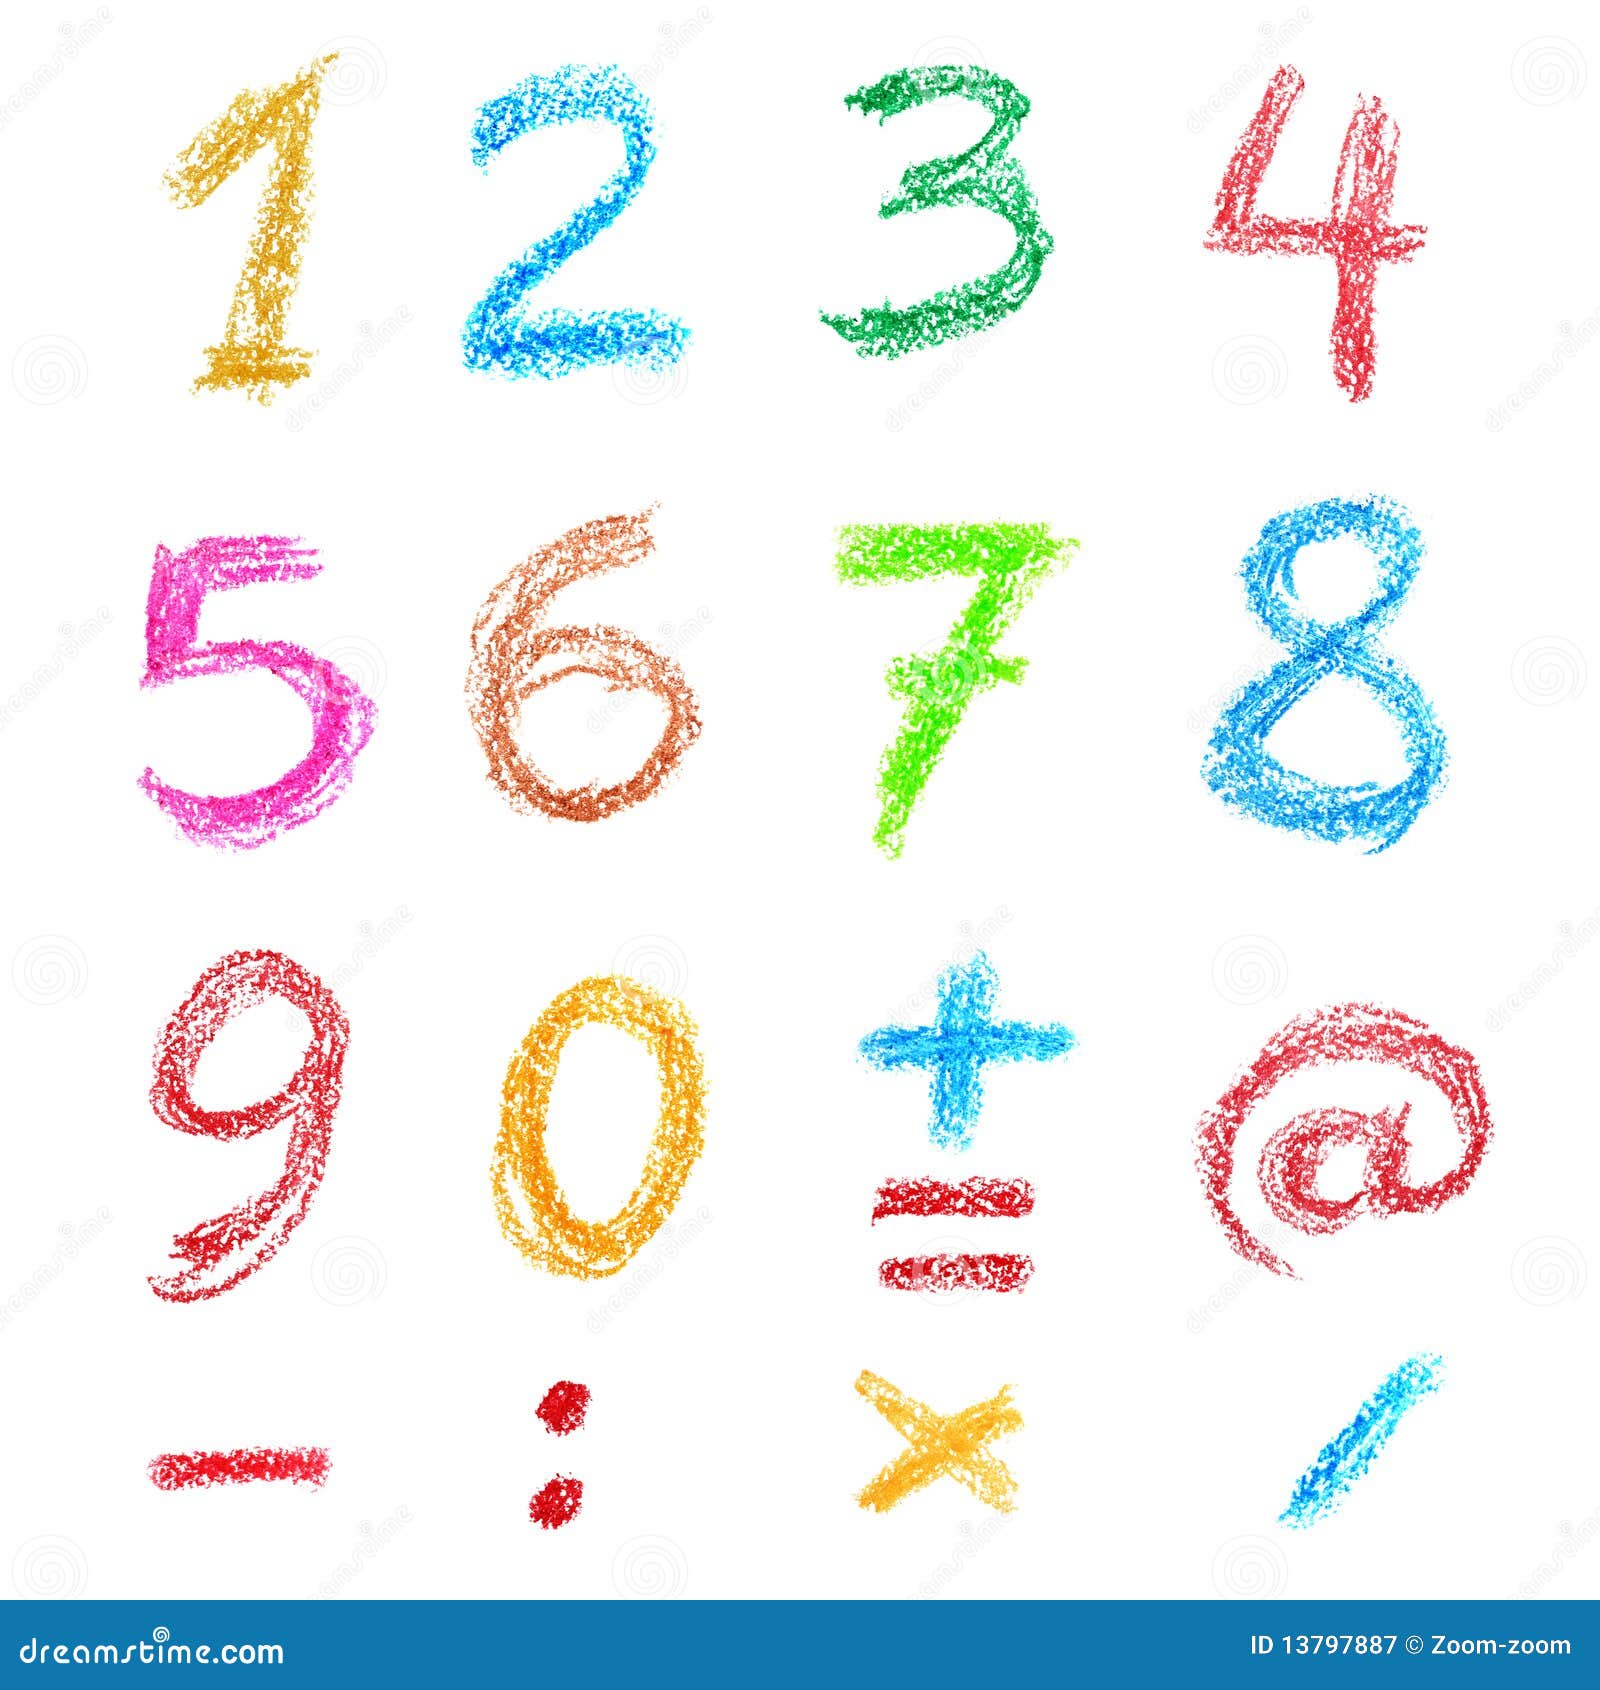 crayon numbers